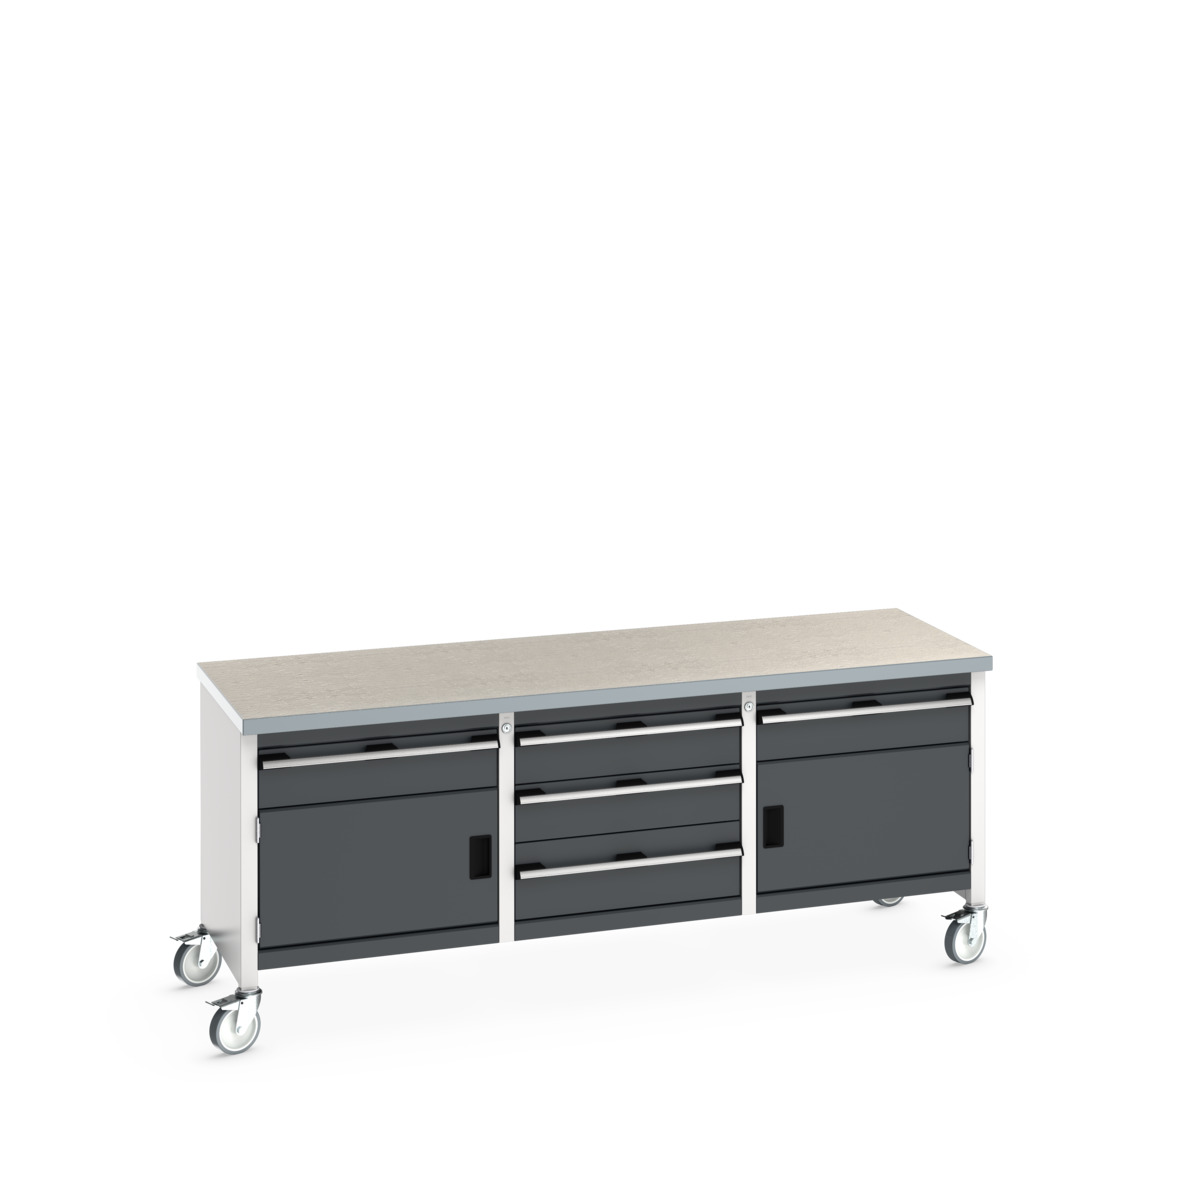 41002135. - cubio mobile storage bench (lino)